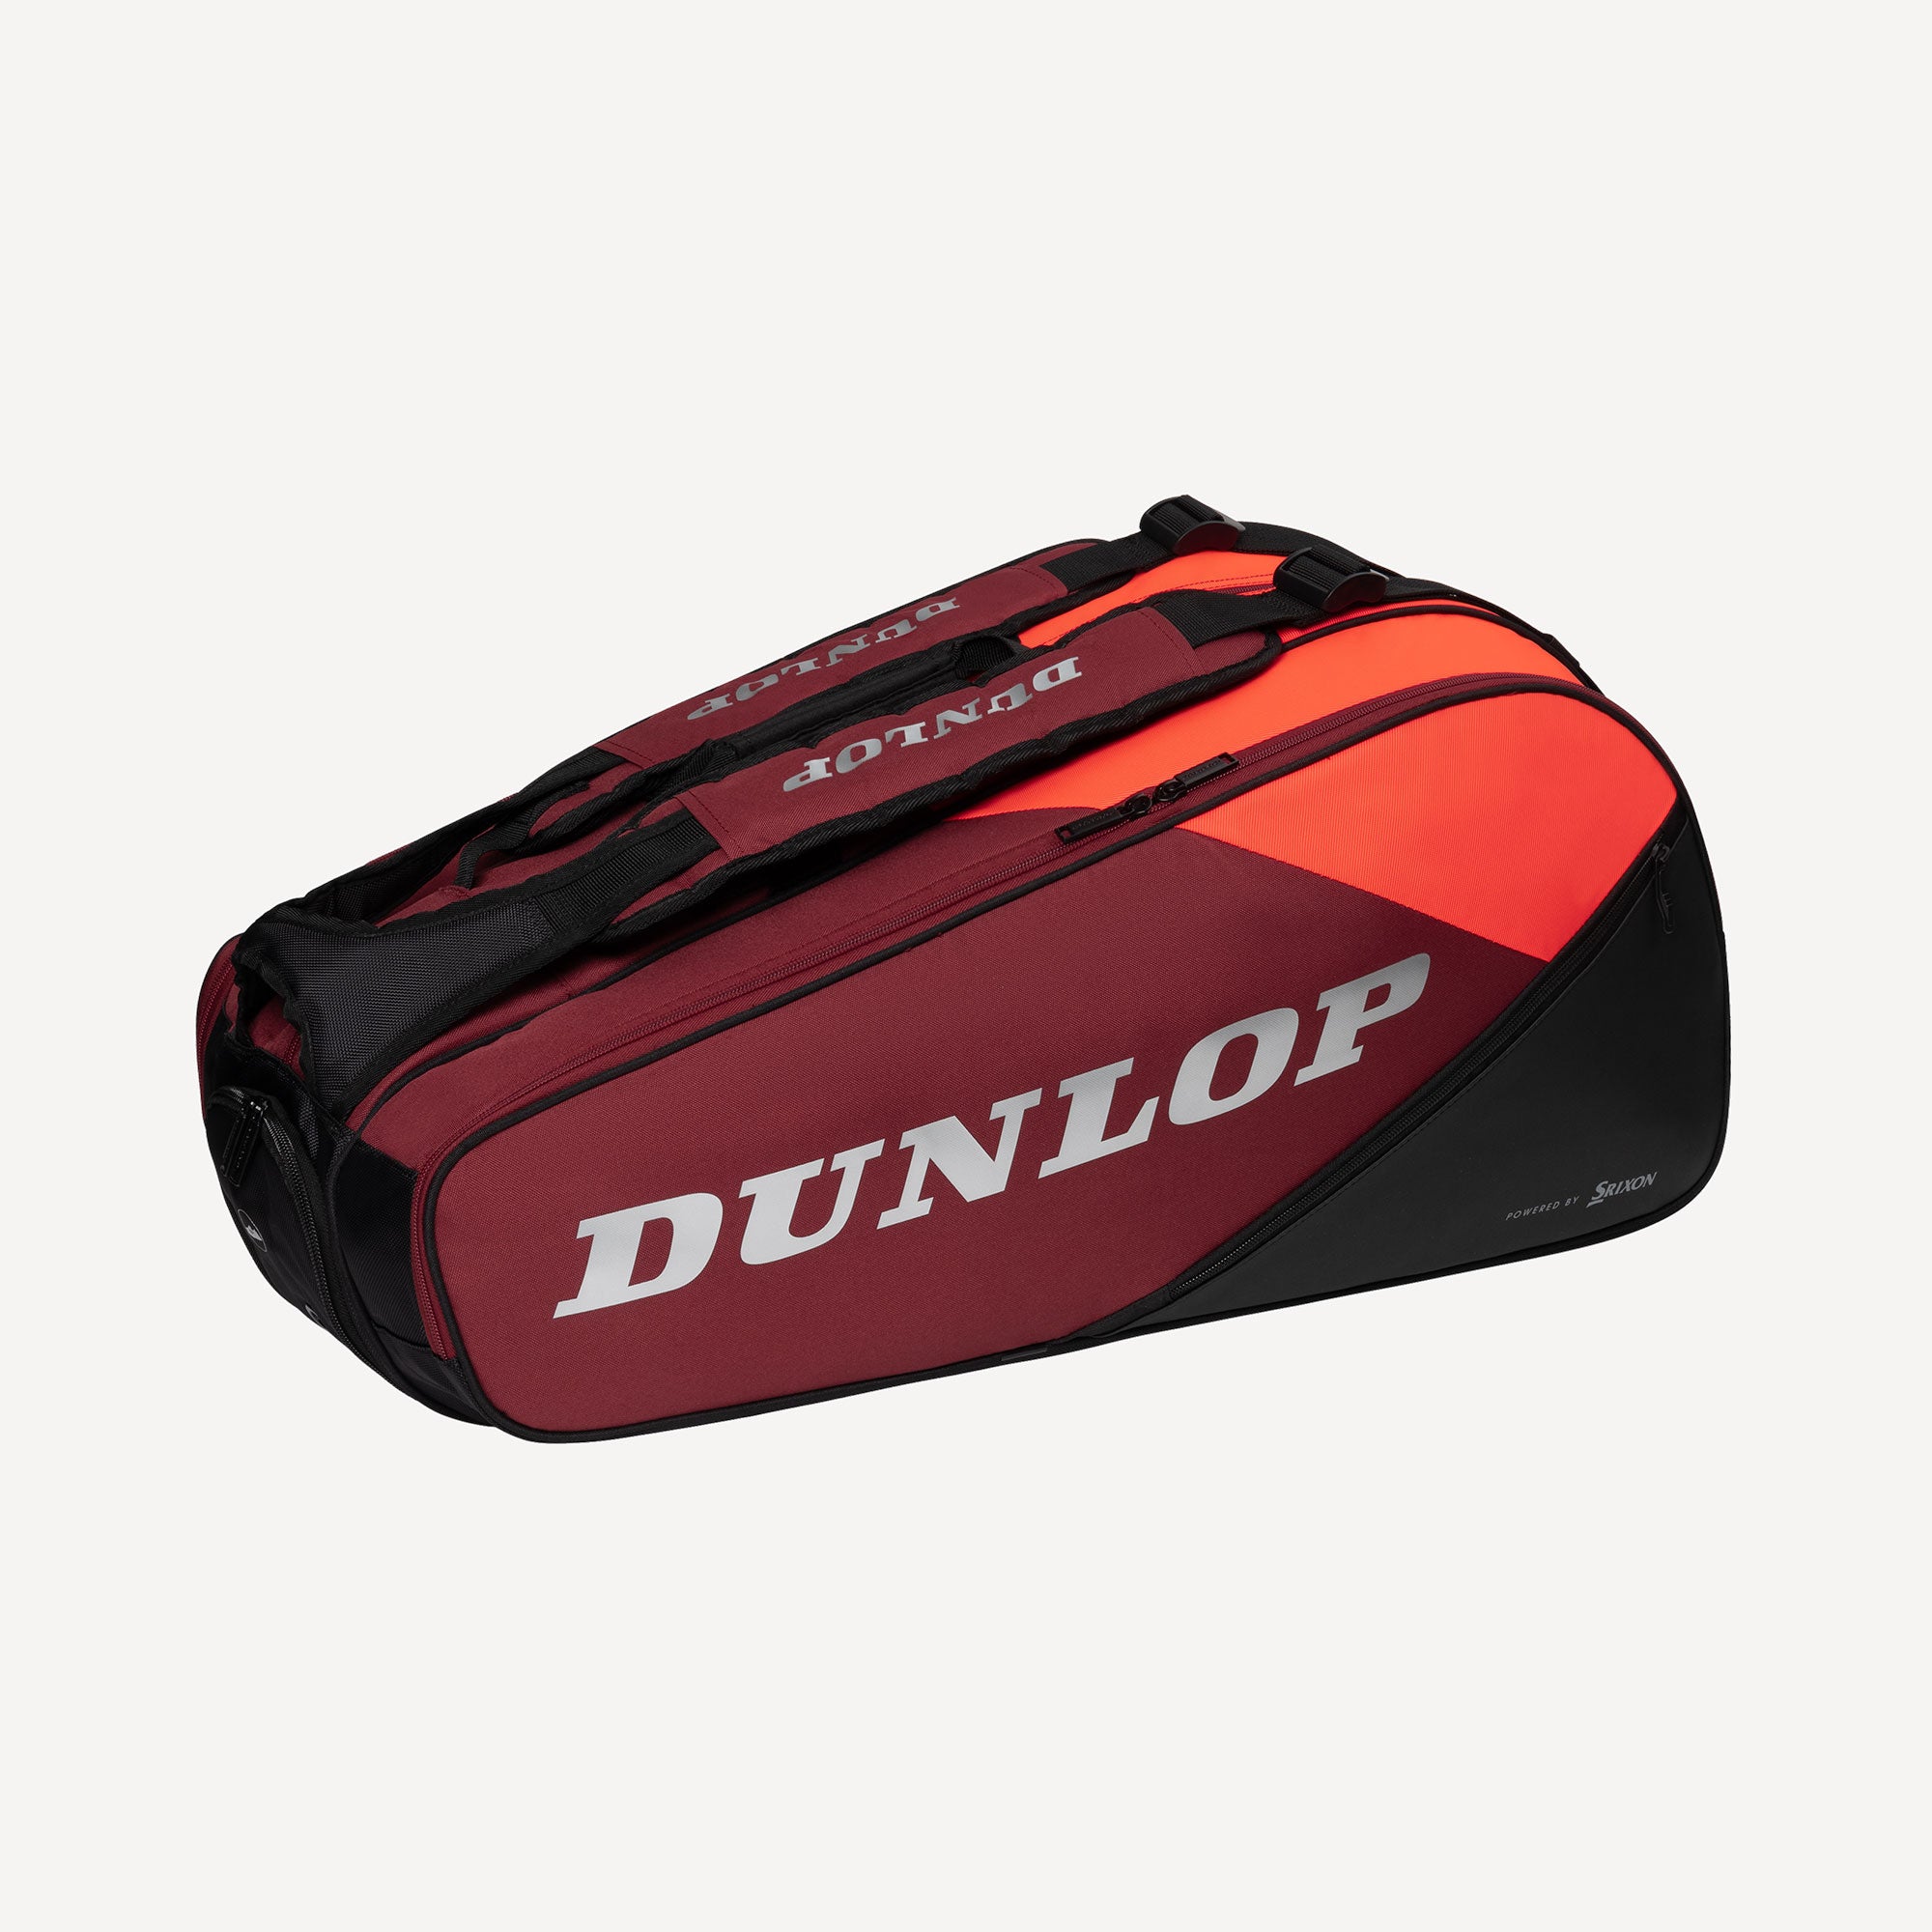 Dunlop Tennis Equipment - Rackets, Bags, Strings & Accessories 